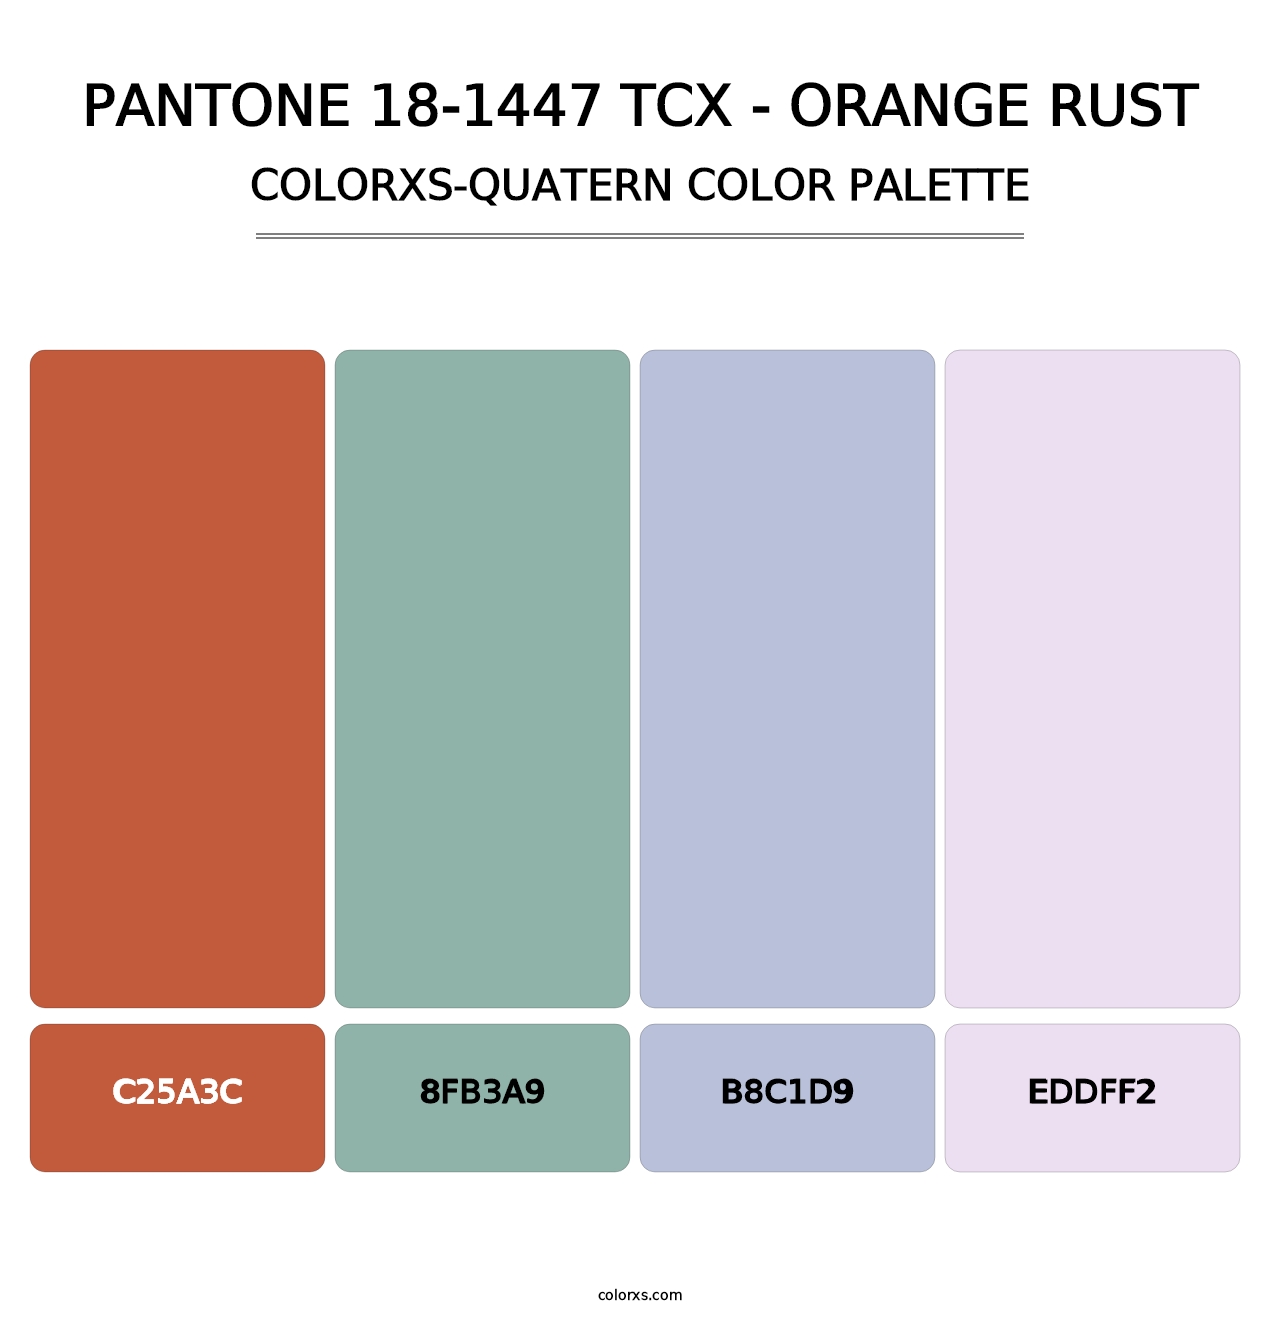 PANTONE 18-1447 TCX - Orange Rust - Colorxs Quatern Palette